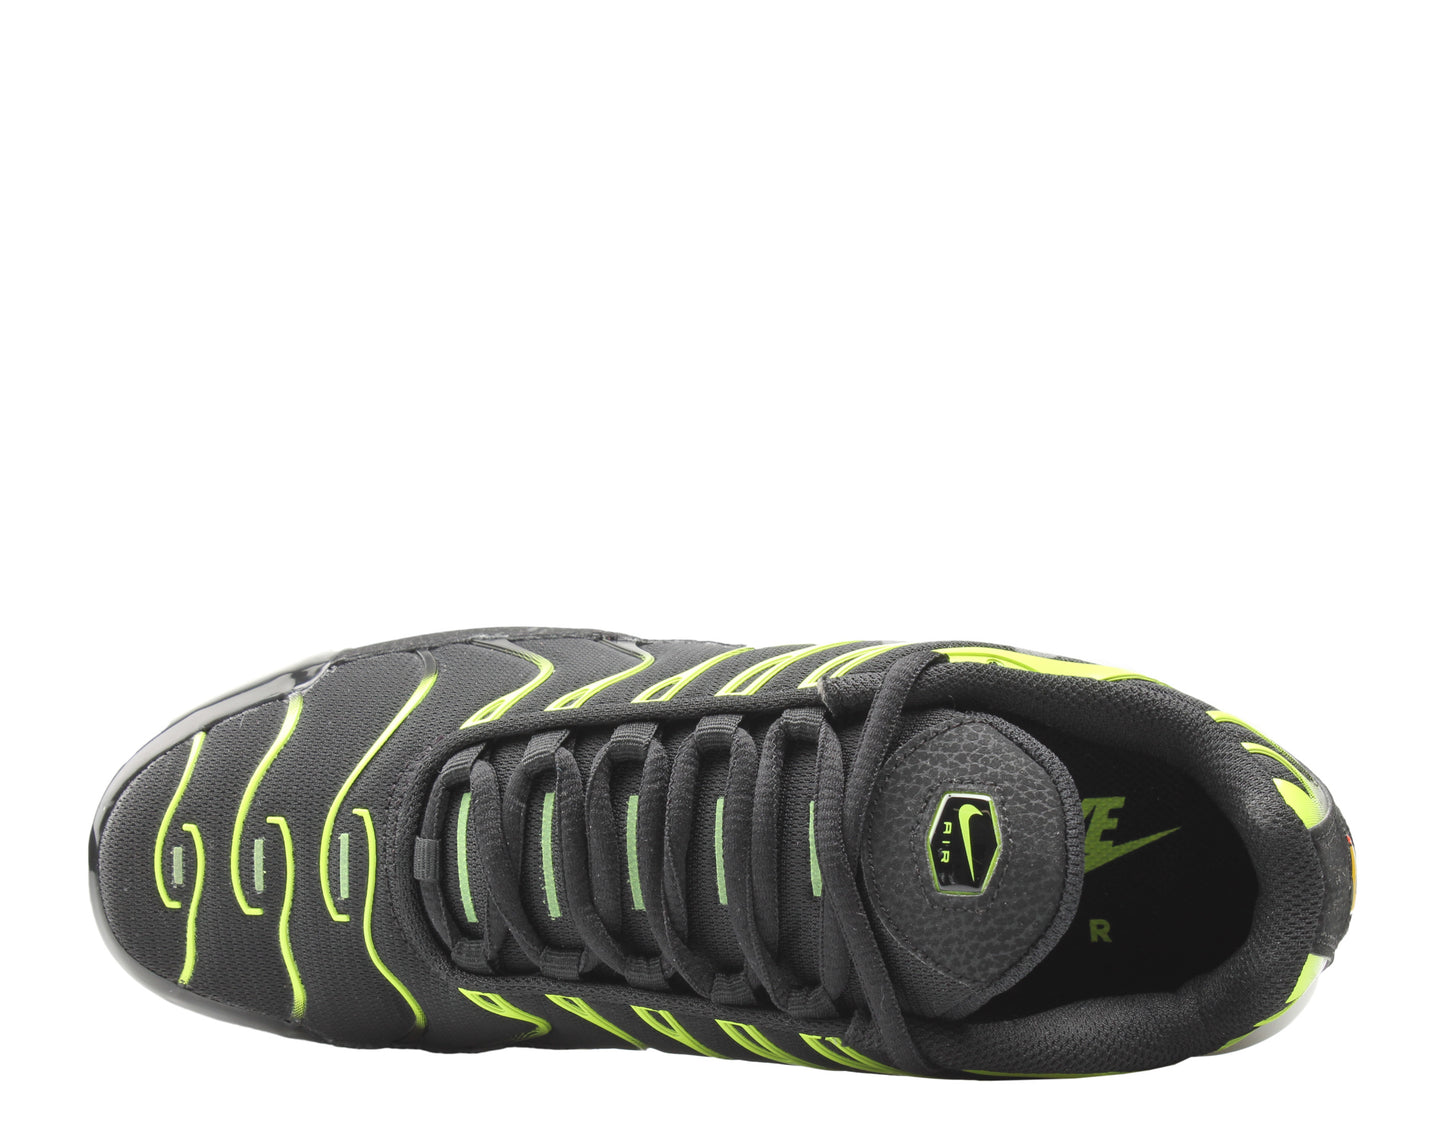 Nike Air Max Plus Black/Volt-White-Platnium Tint Men's Running Shoes 852630-037